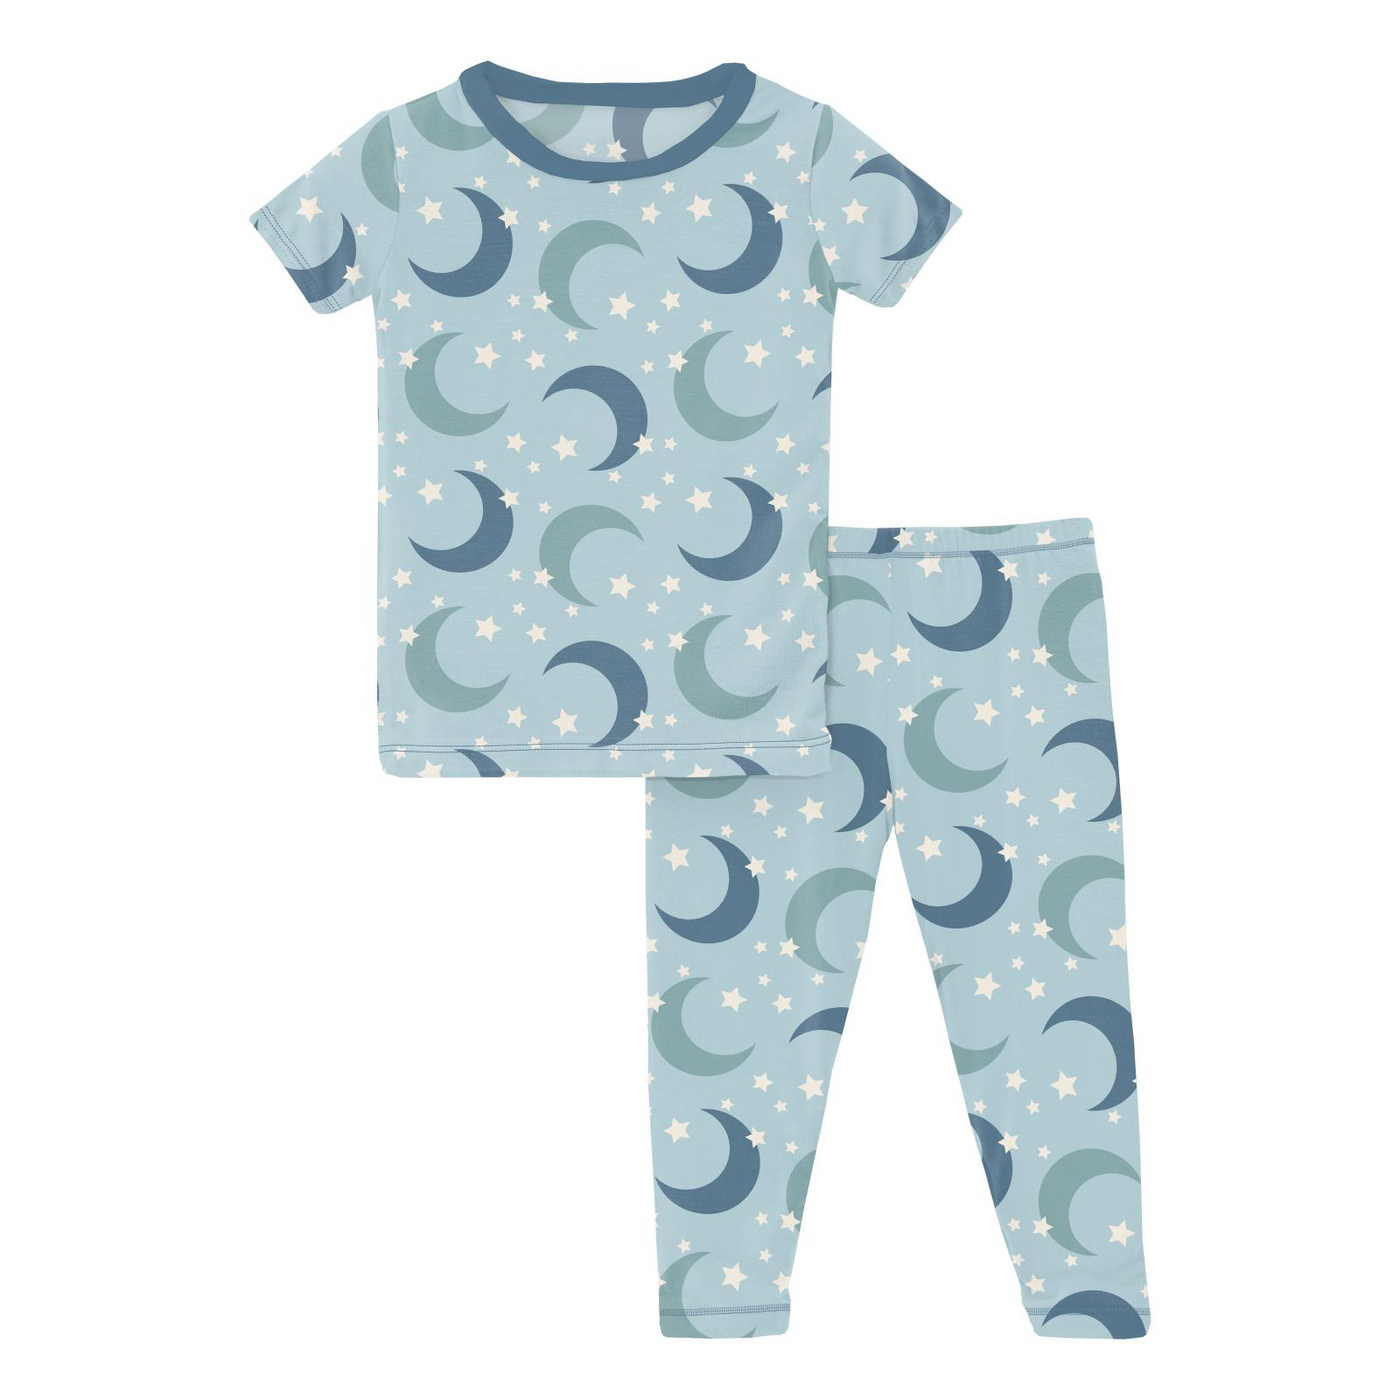 Kickee Pants Pajama Set: Spring Sky Moon and Stars